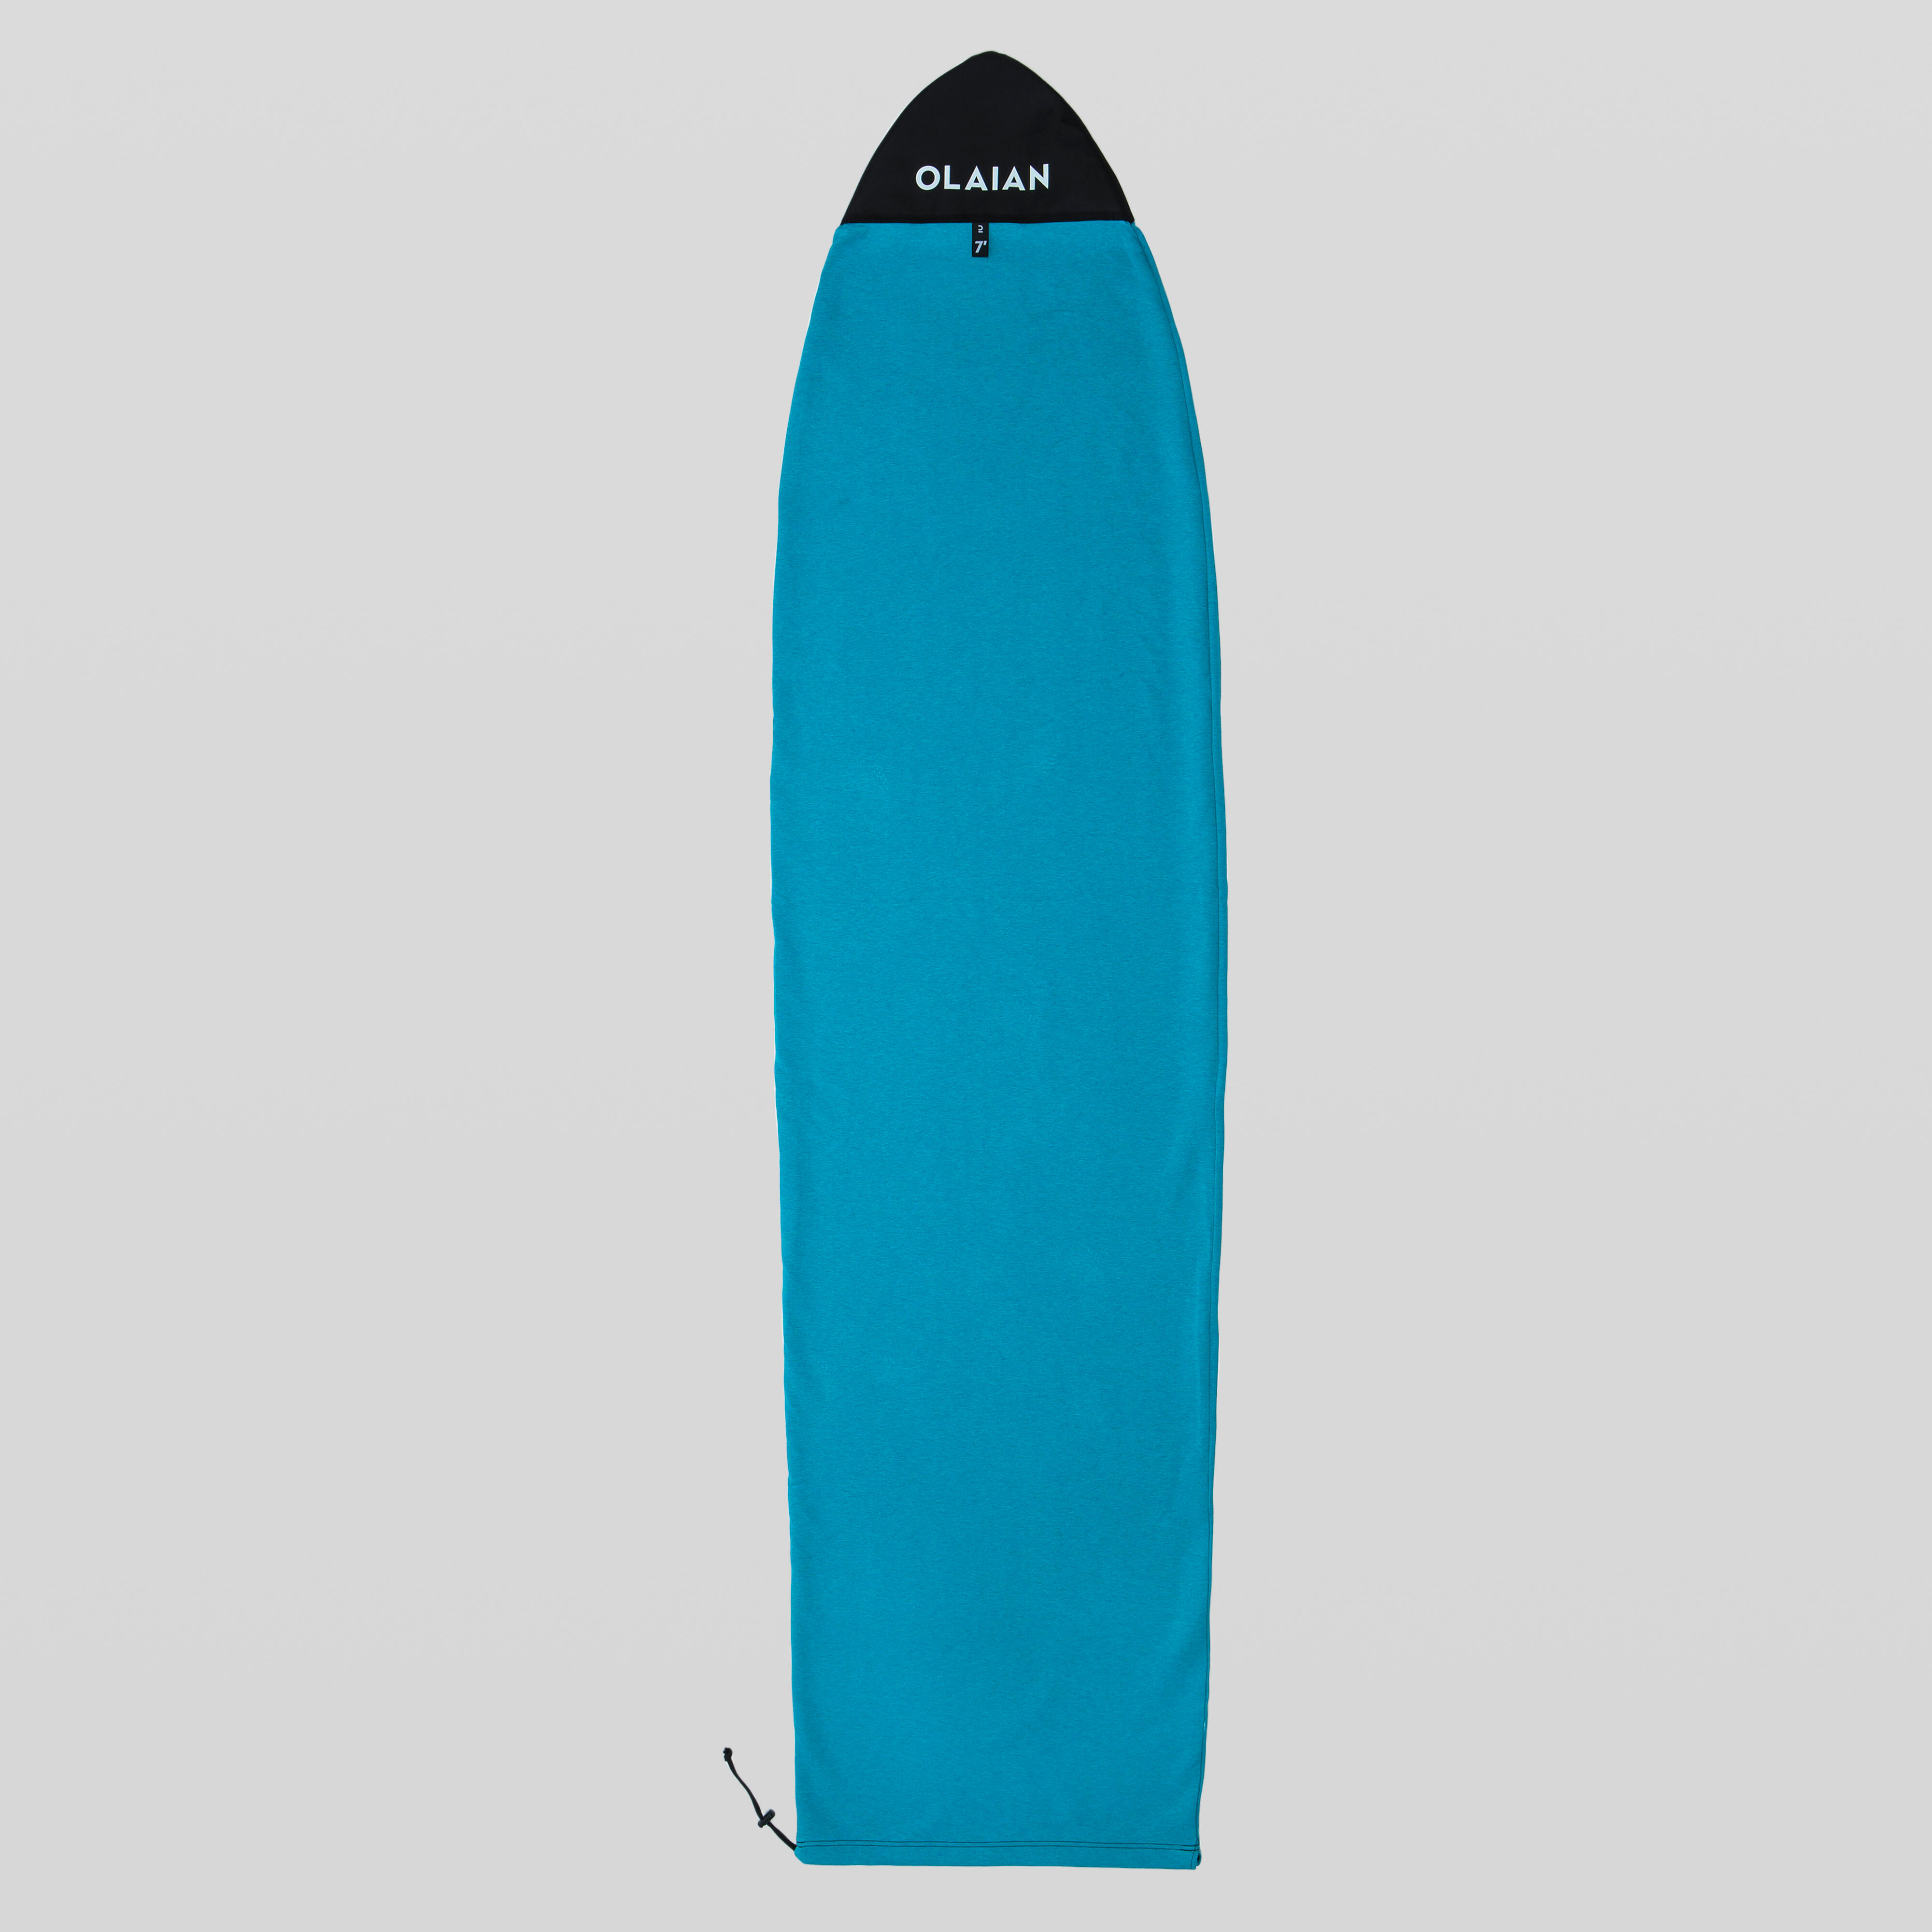 OLAIAN Boardbag Surfboard max. 7'2'' blau EINHEITSGRÖSSE